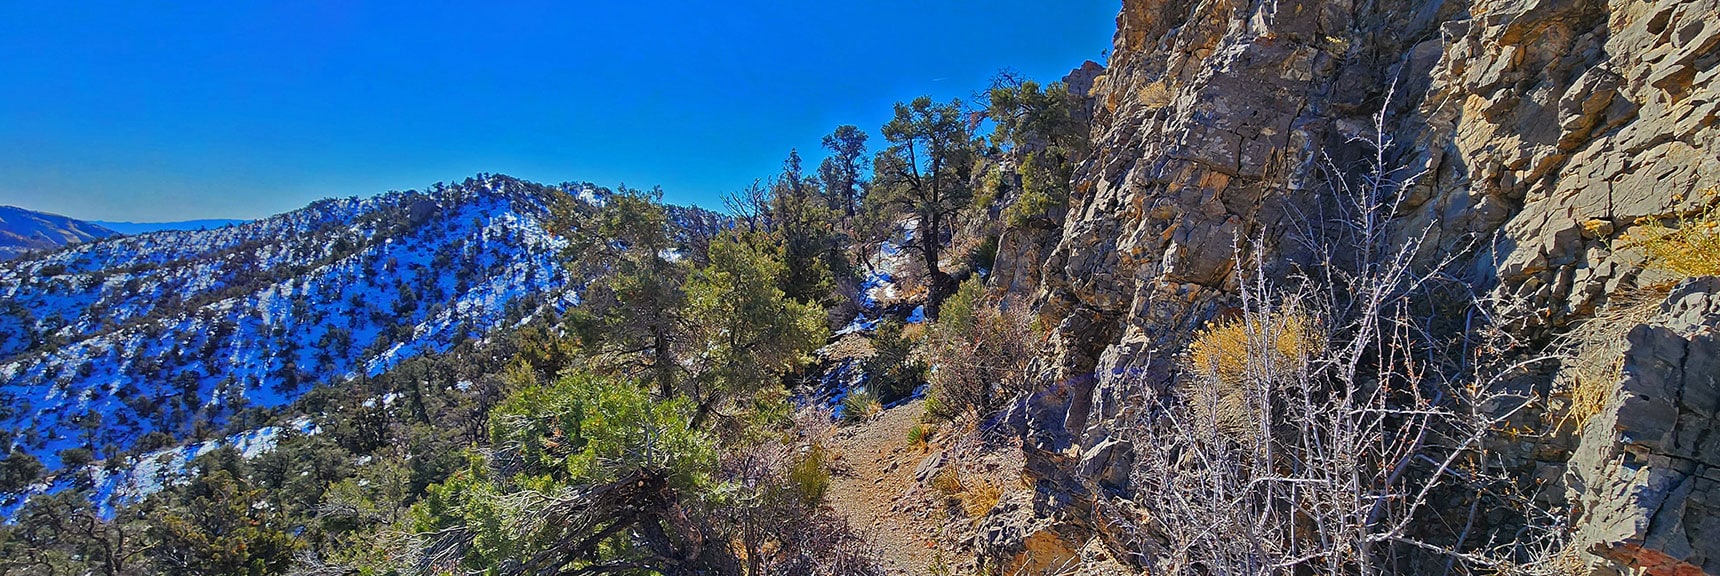 Strategy on This Trail and Ahead on the Pathless Ridge Ahead: Hug the Left Edge. | Mid Upper Crest Ridgeline | Rainbow Mountain Wilderness, Nevada